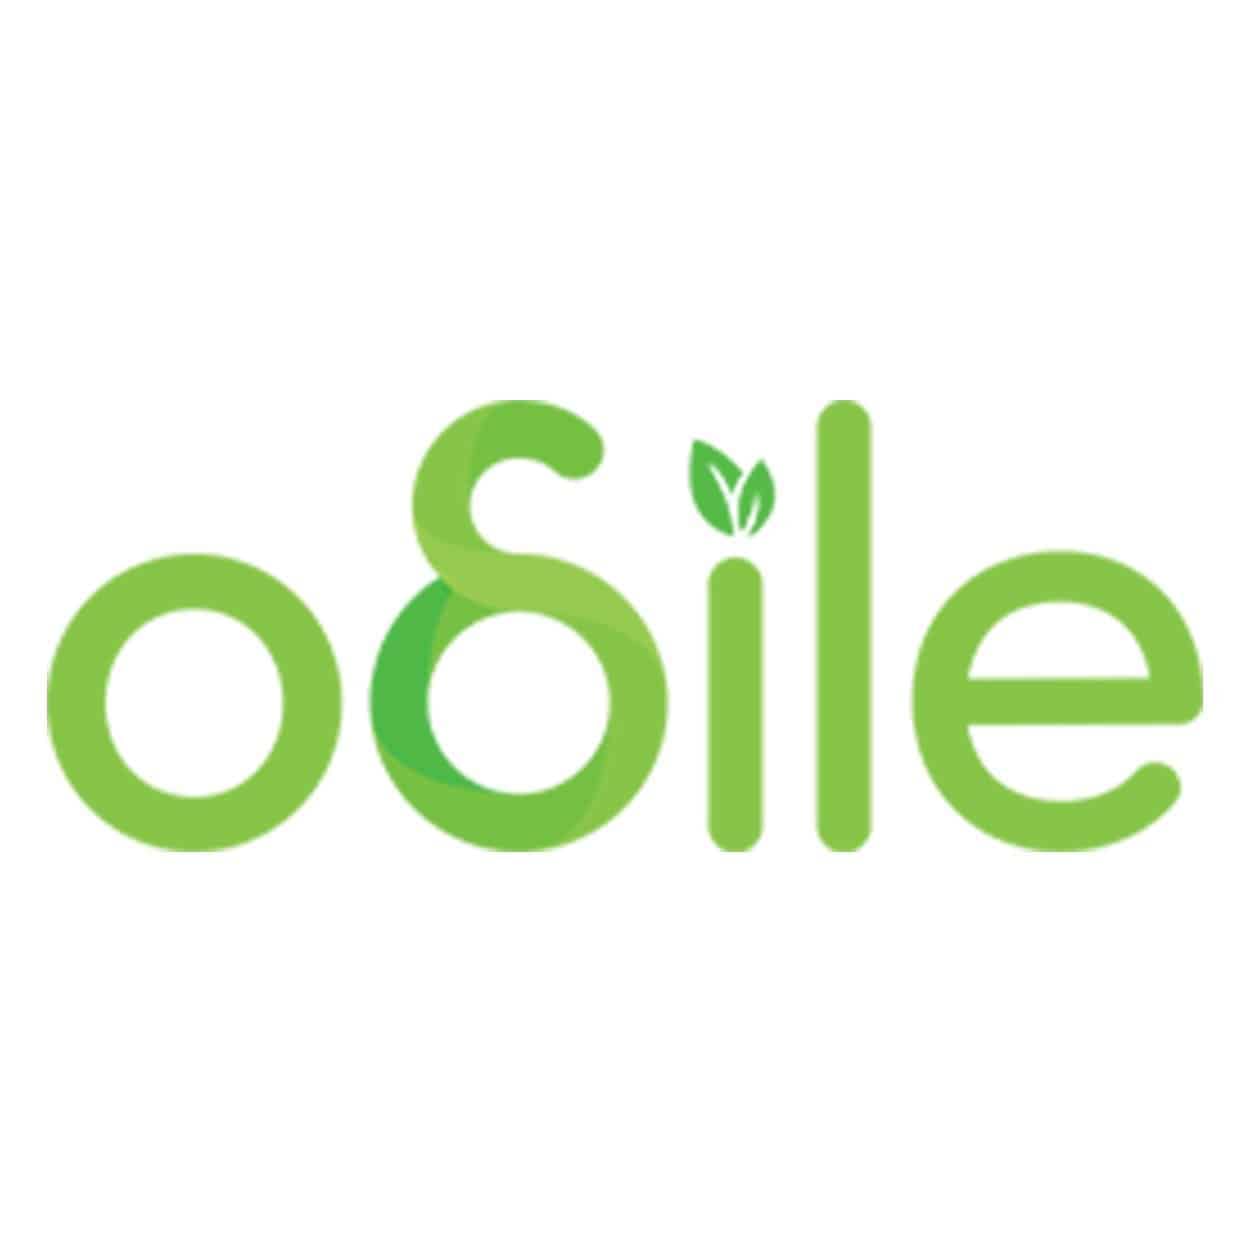 odile-green-logo